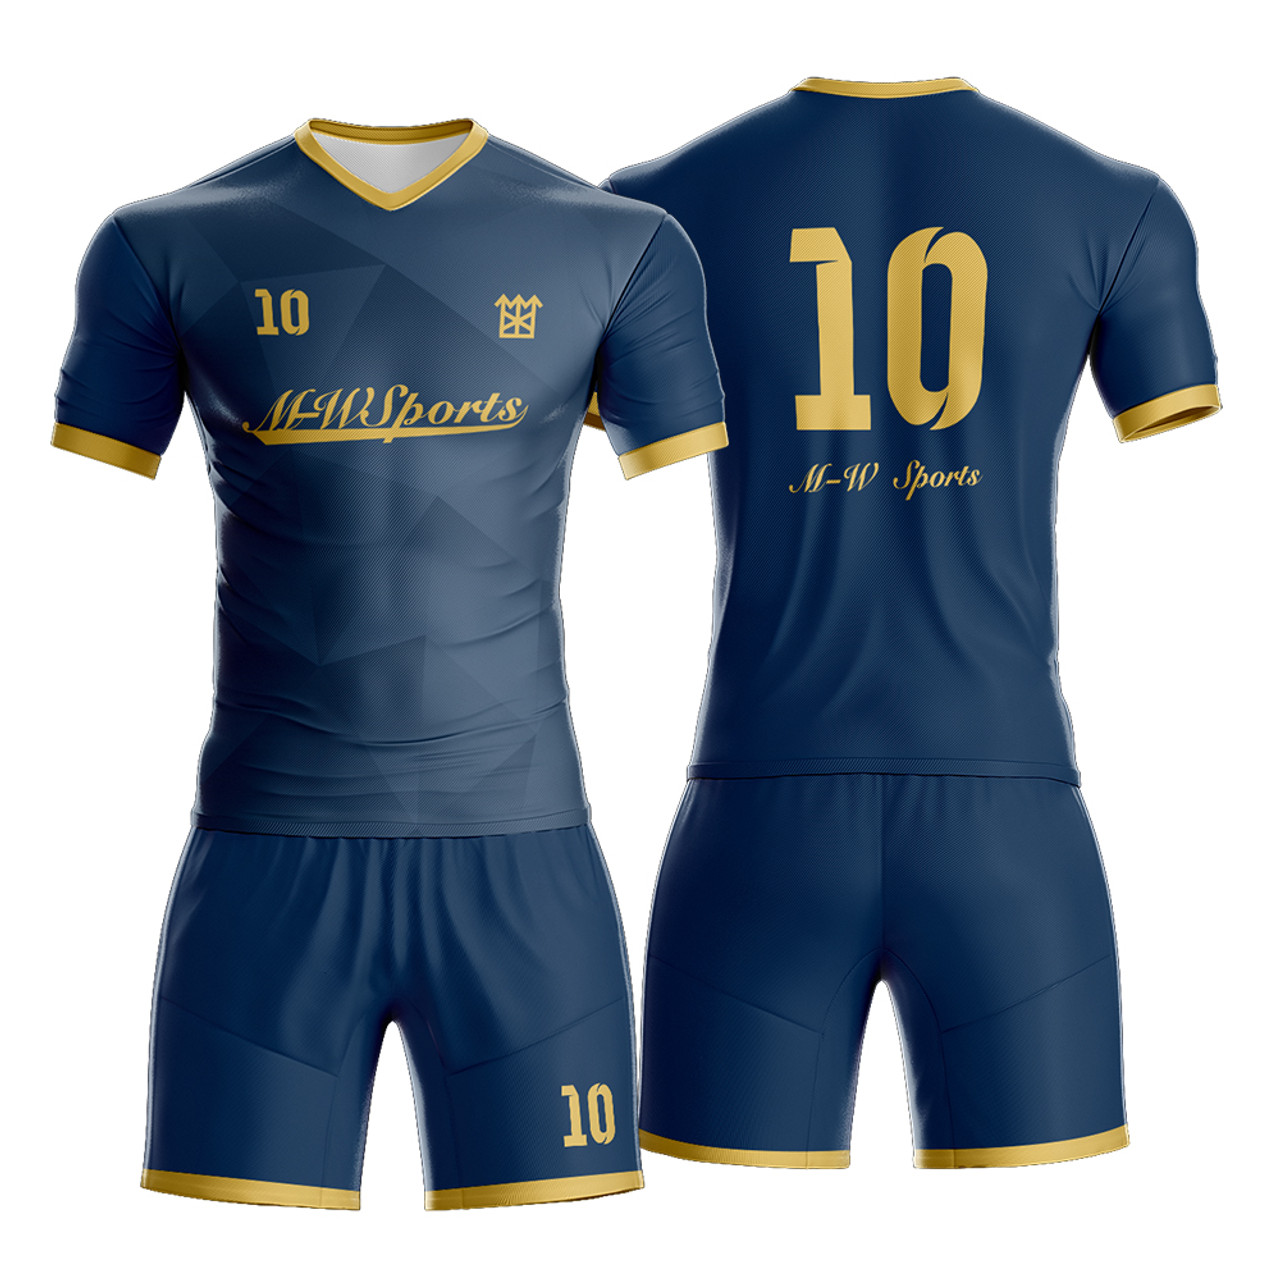 football jersey design new